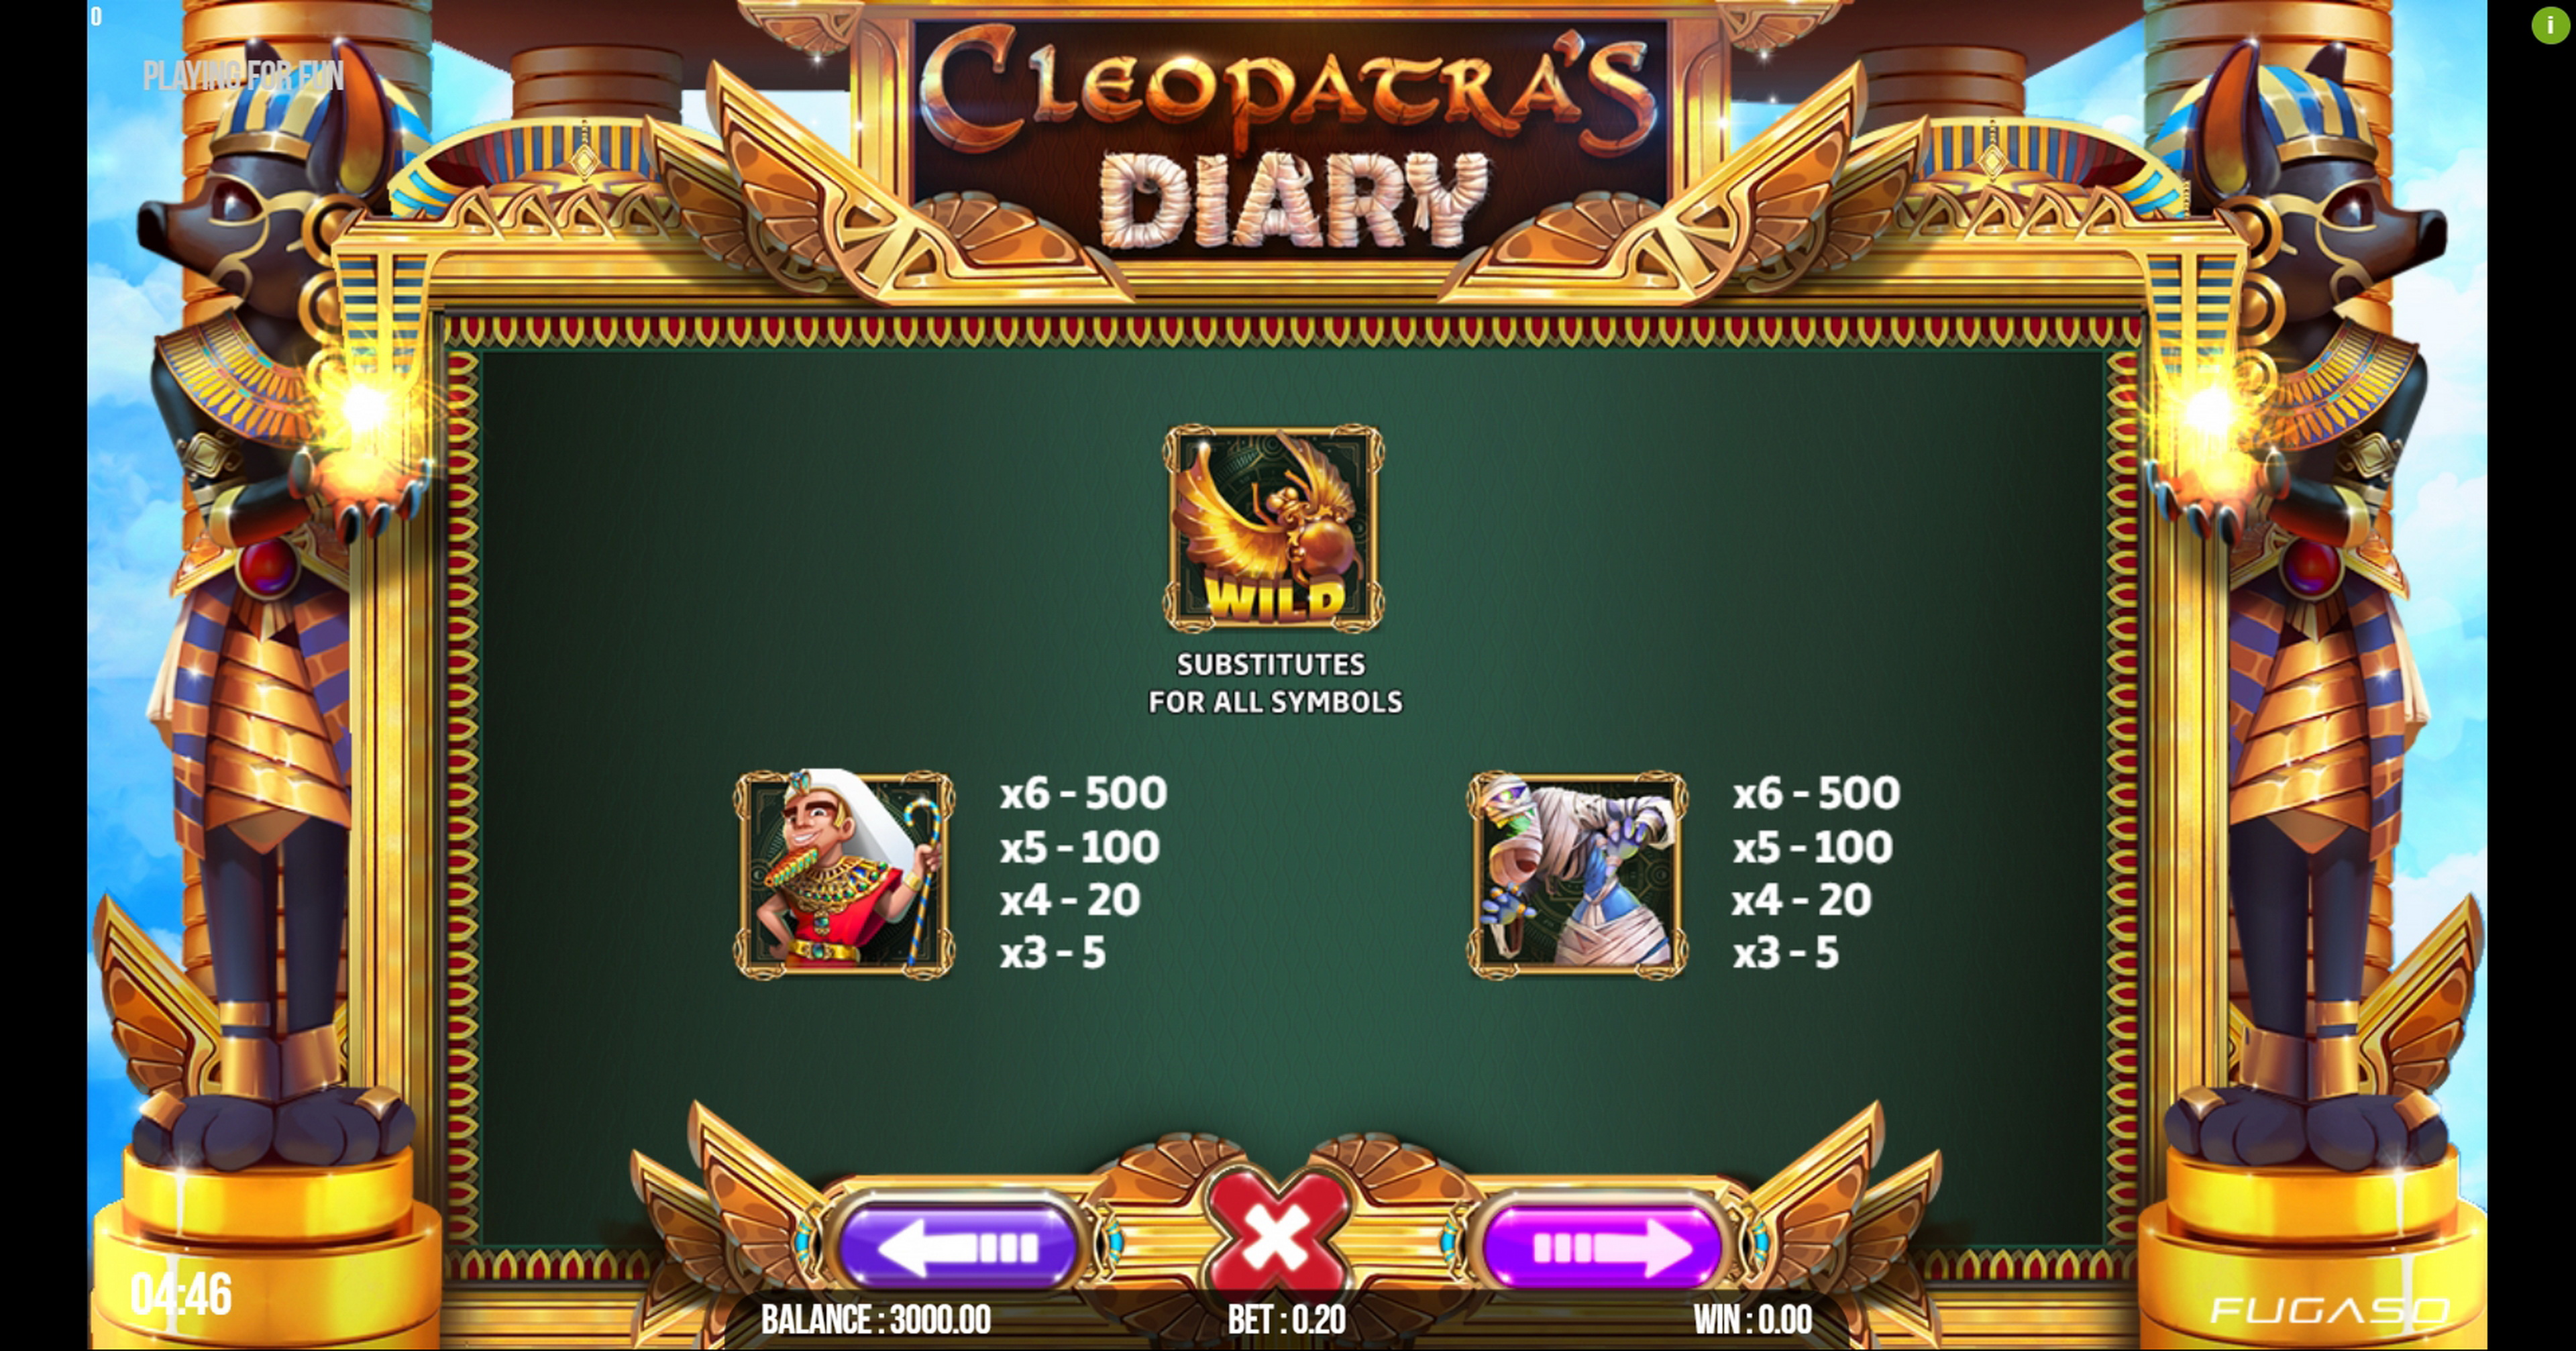 Info of Cleopatra's Diary Slot Game by Fugaso